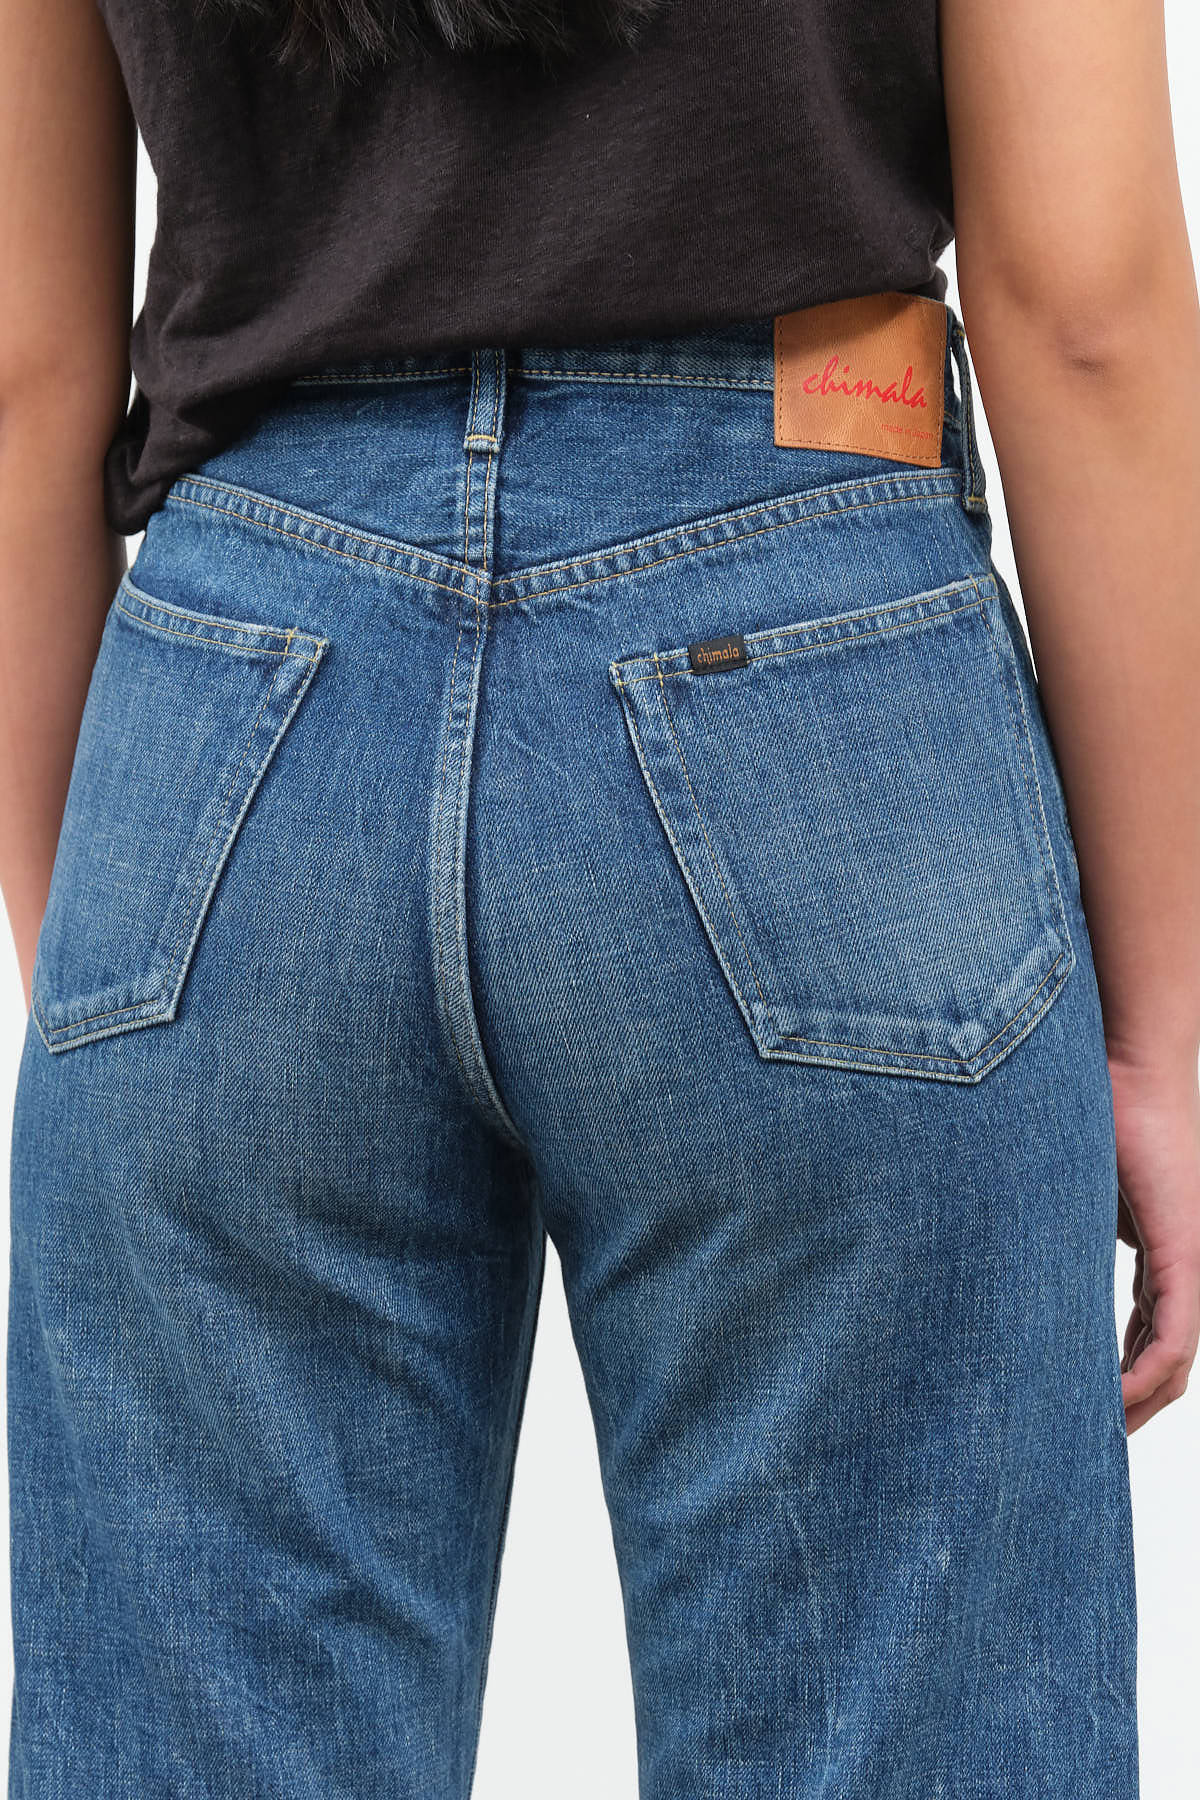 Rear pocket view of Short Unisex Straight Cut Selvedge Denim